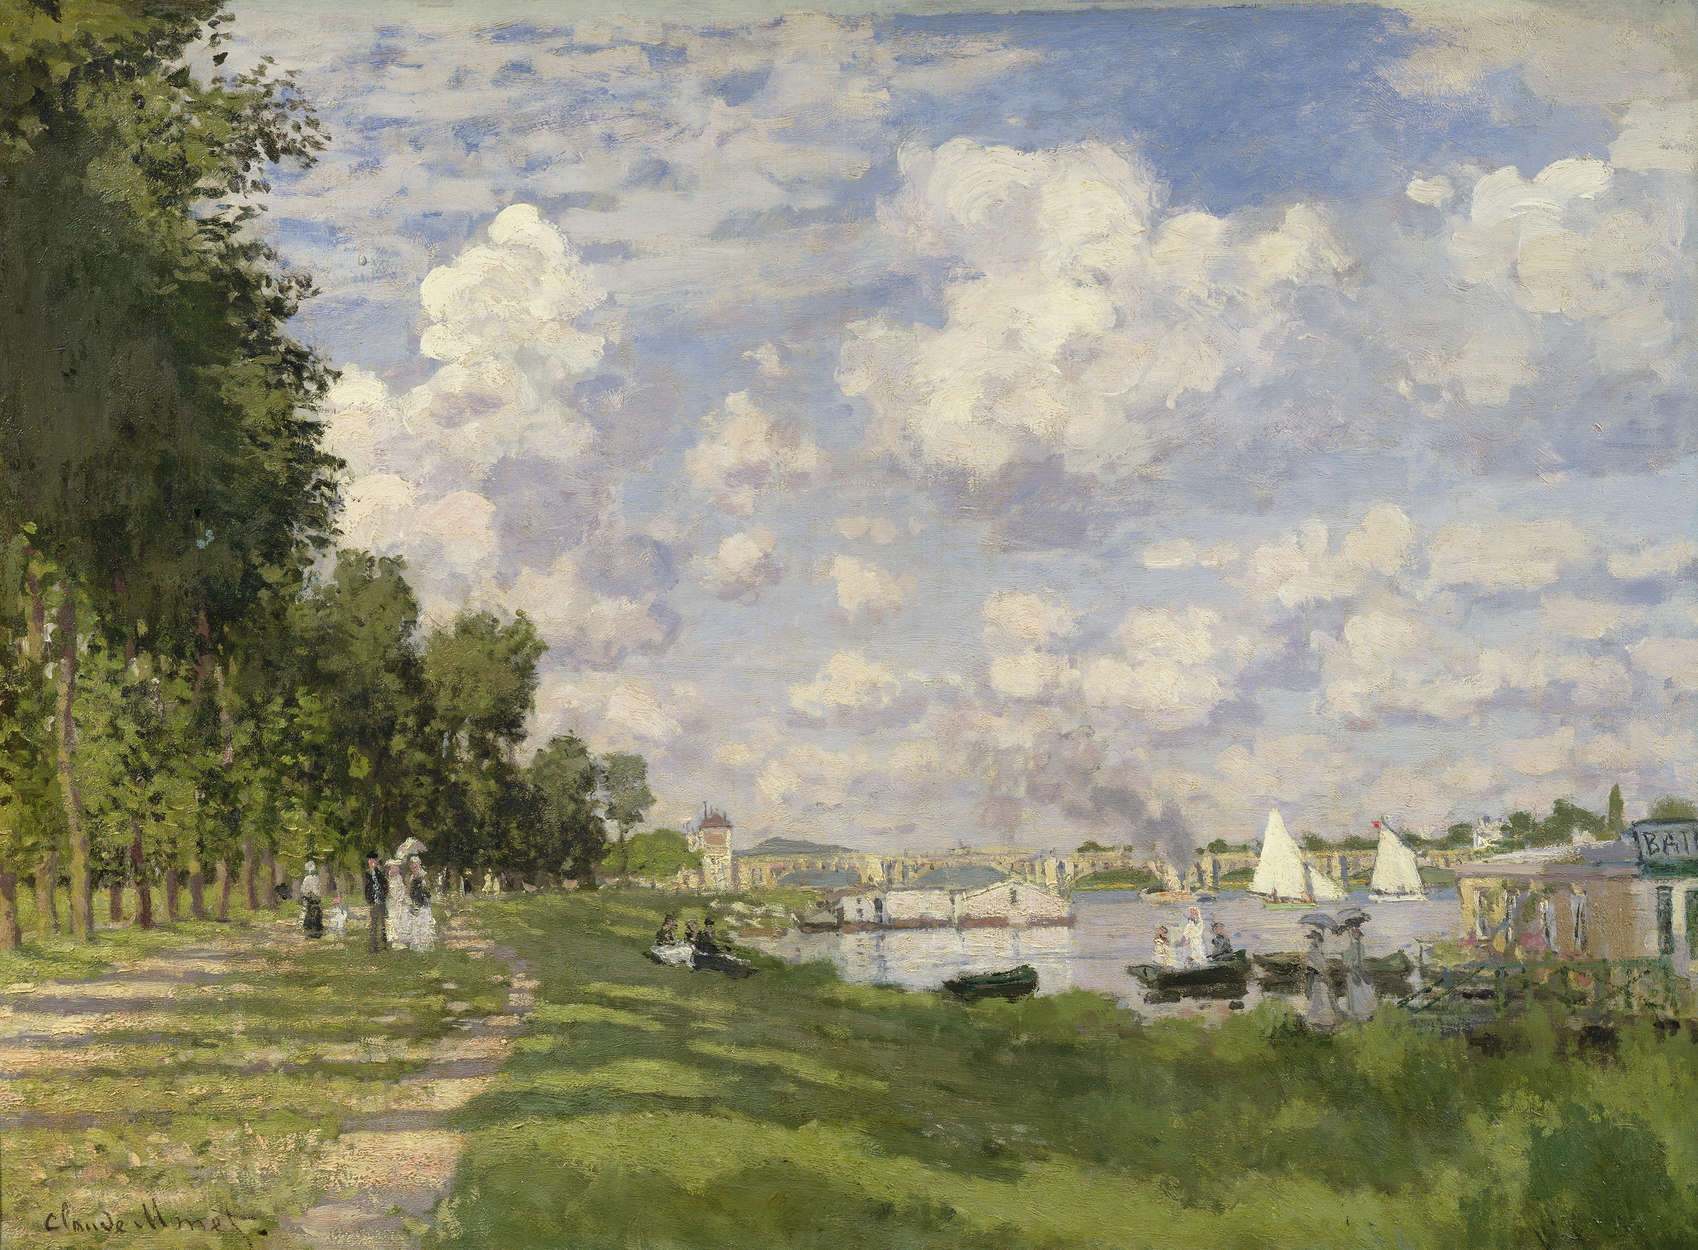             Il murale "La Marina di Argenteuil" di Claude Monet
        